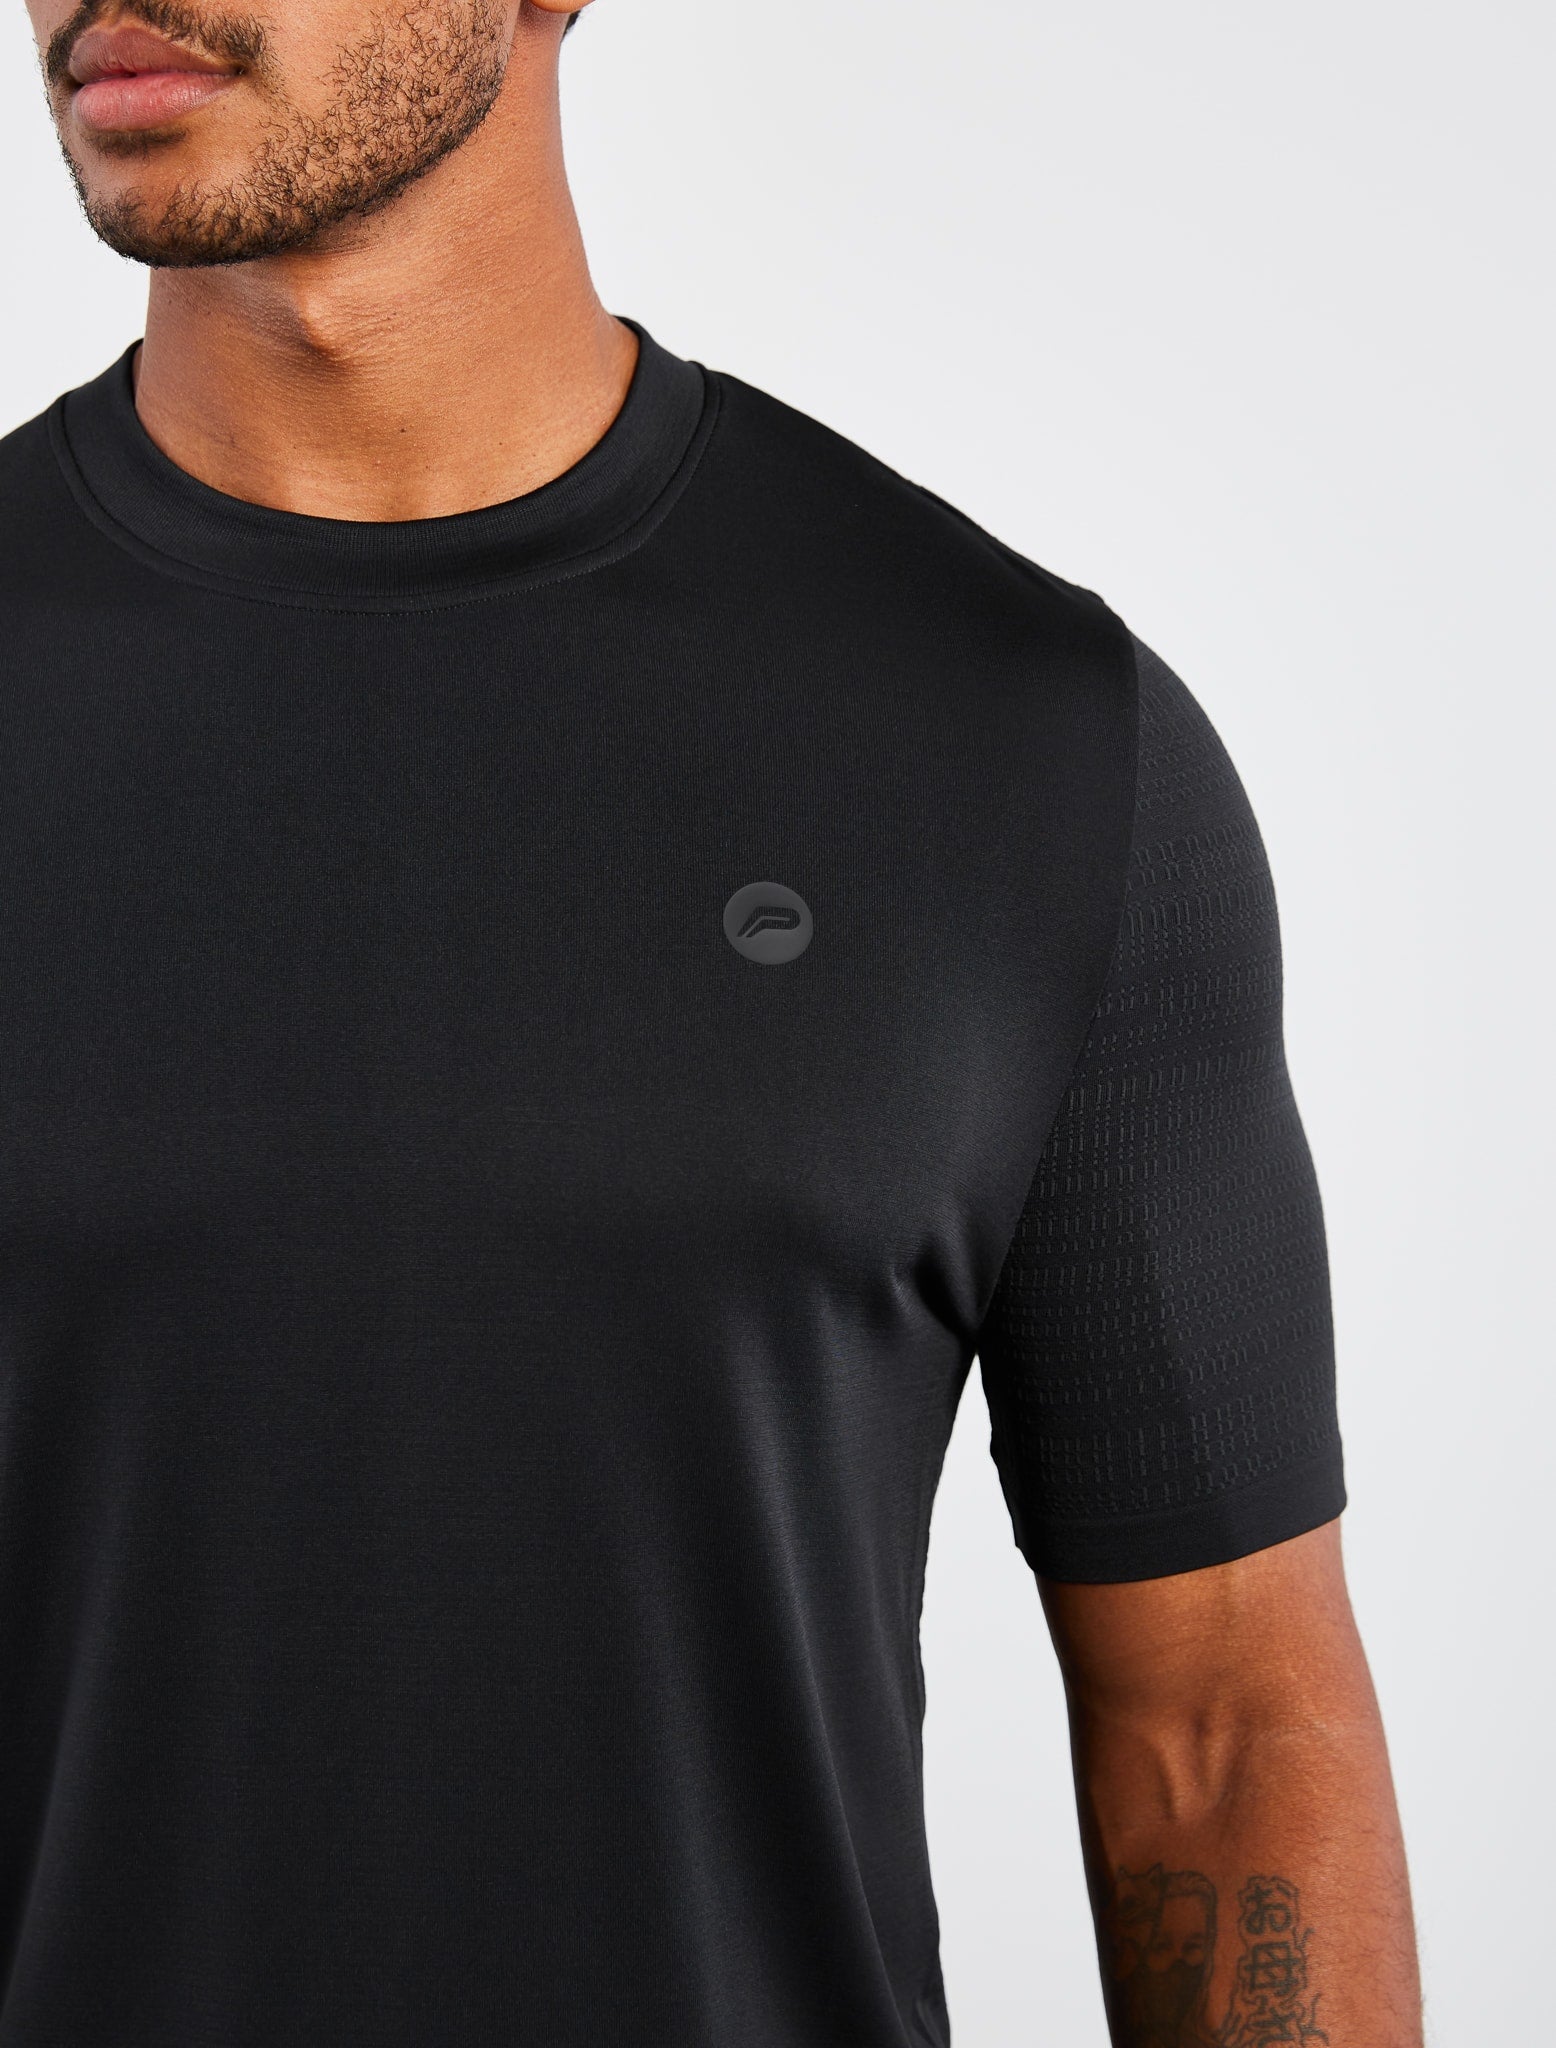 Utility Seamless T-Shirt - Black Pursue Fitness 2